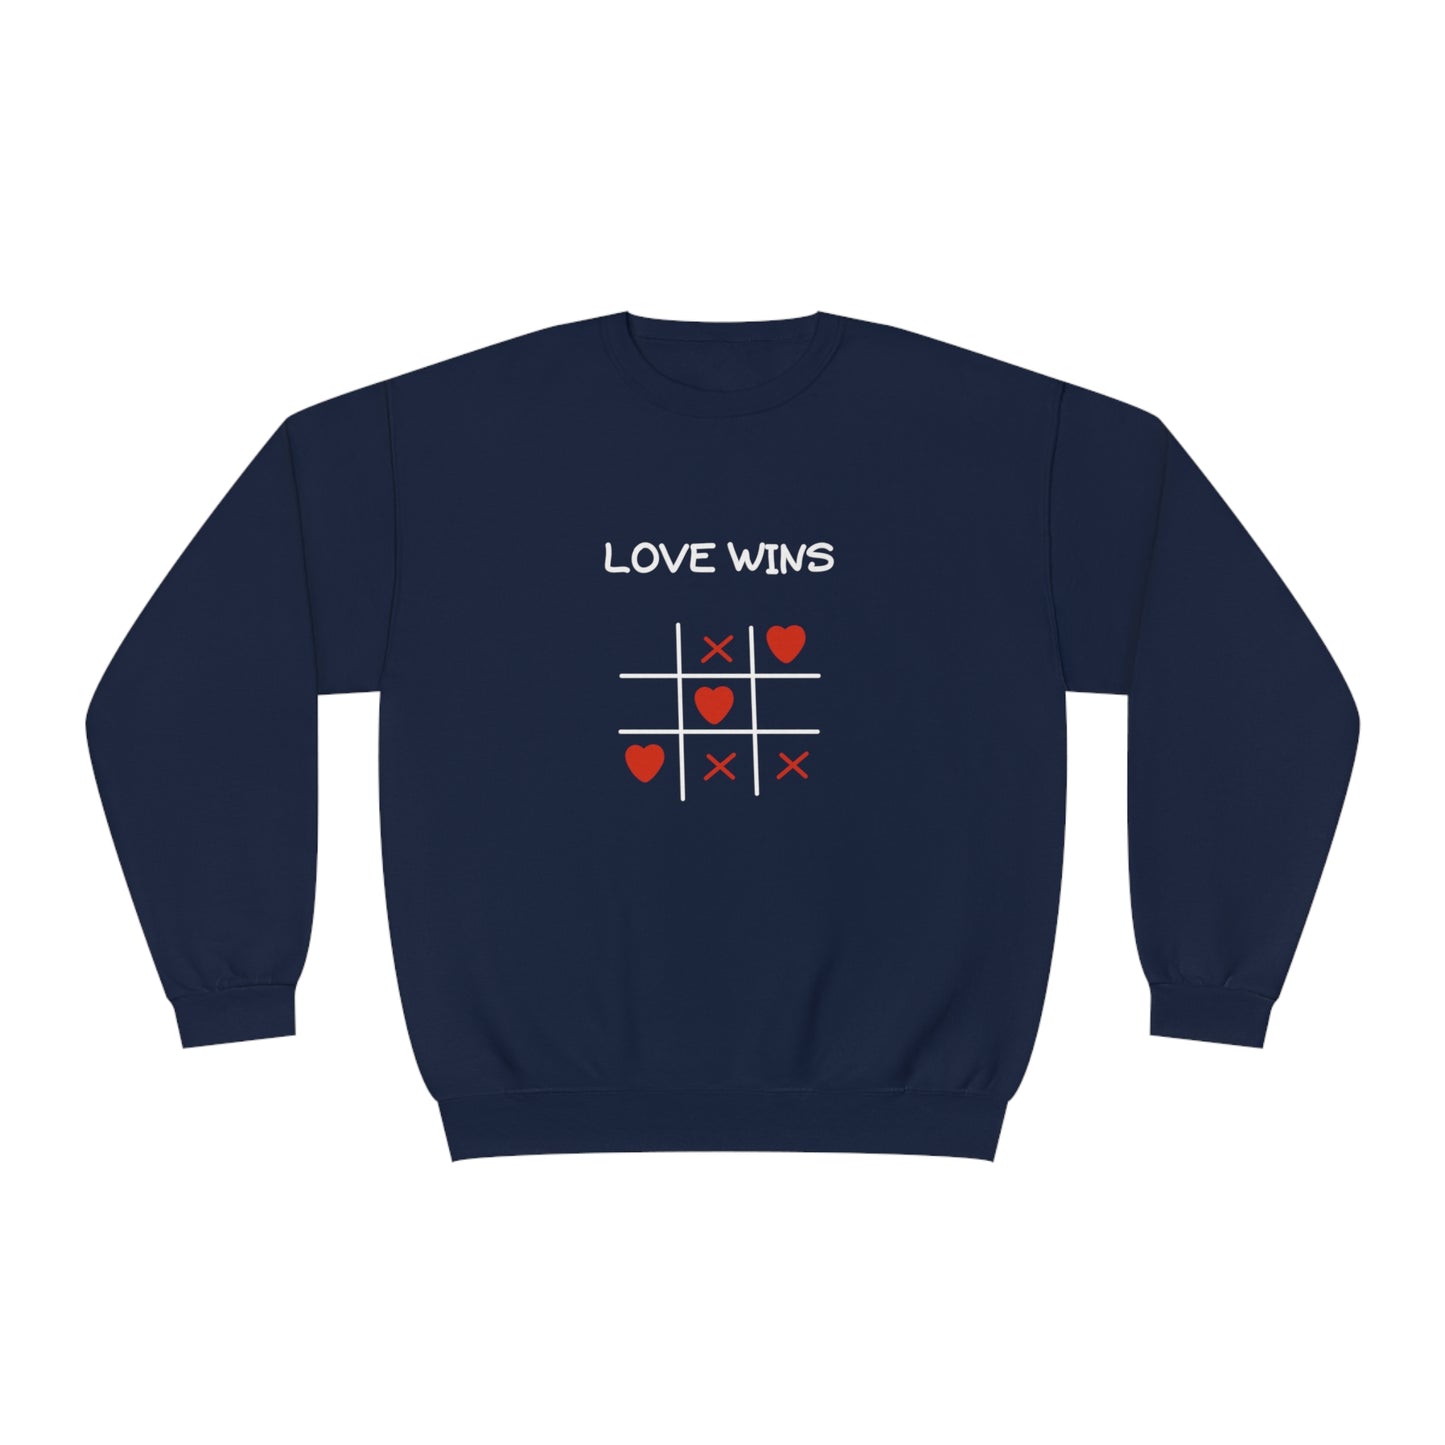 Love Wins. Unisex NuBlend® Crewneck Sweatshirt